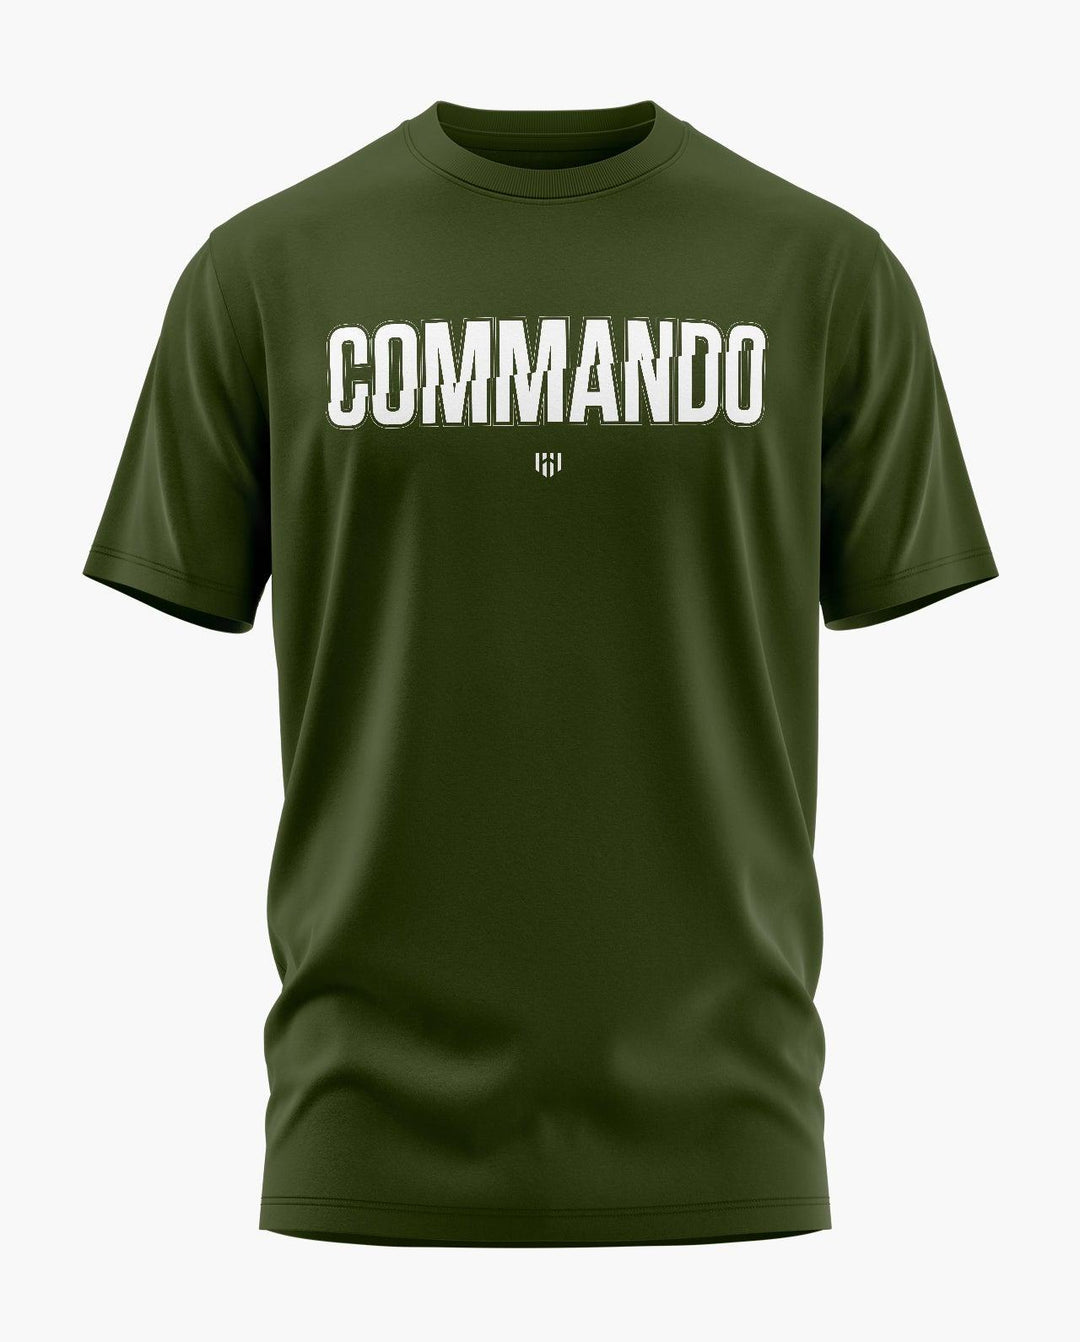 Commando Title T-Shirt - Aero Armour